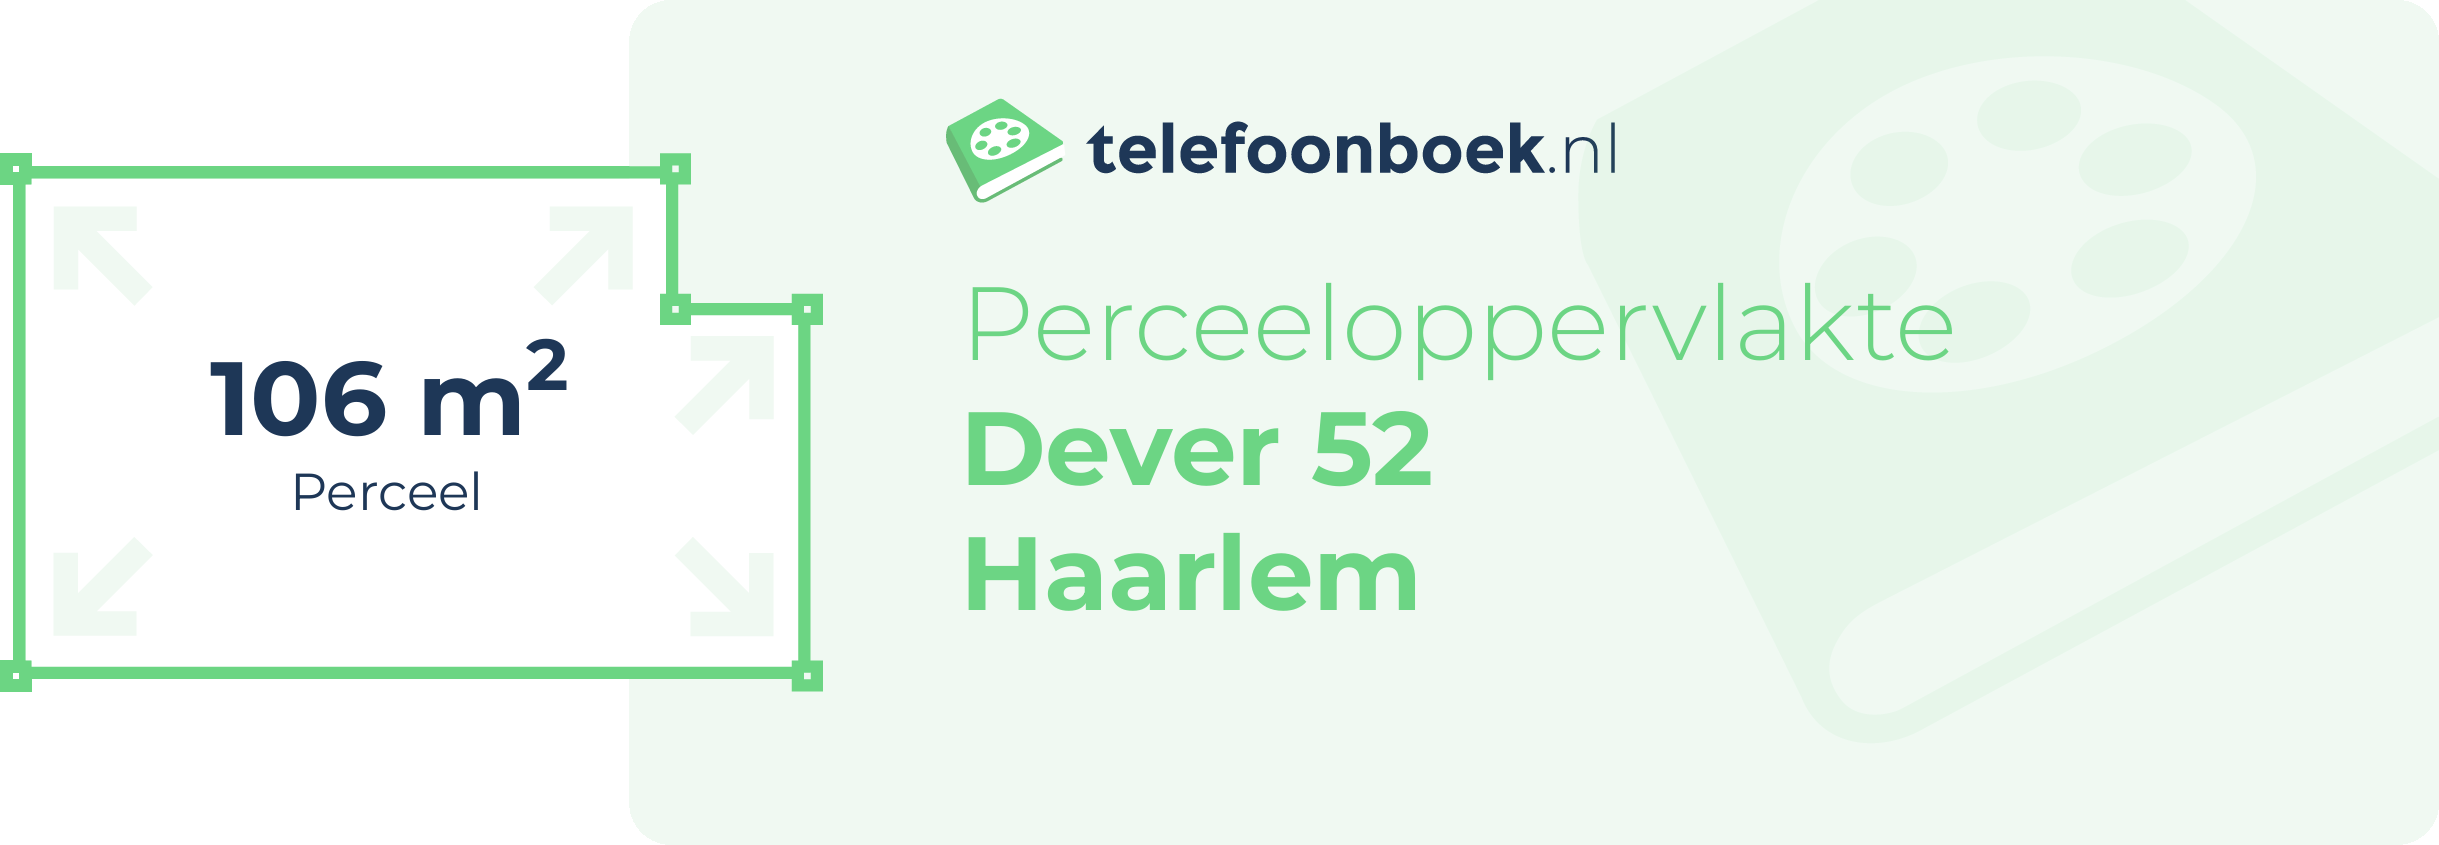 Perceeloppervlakte Dever 52 Haarlem